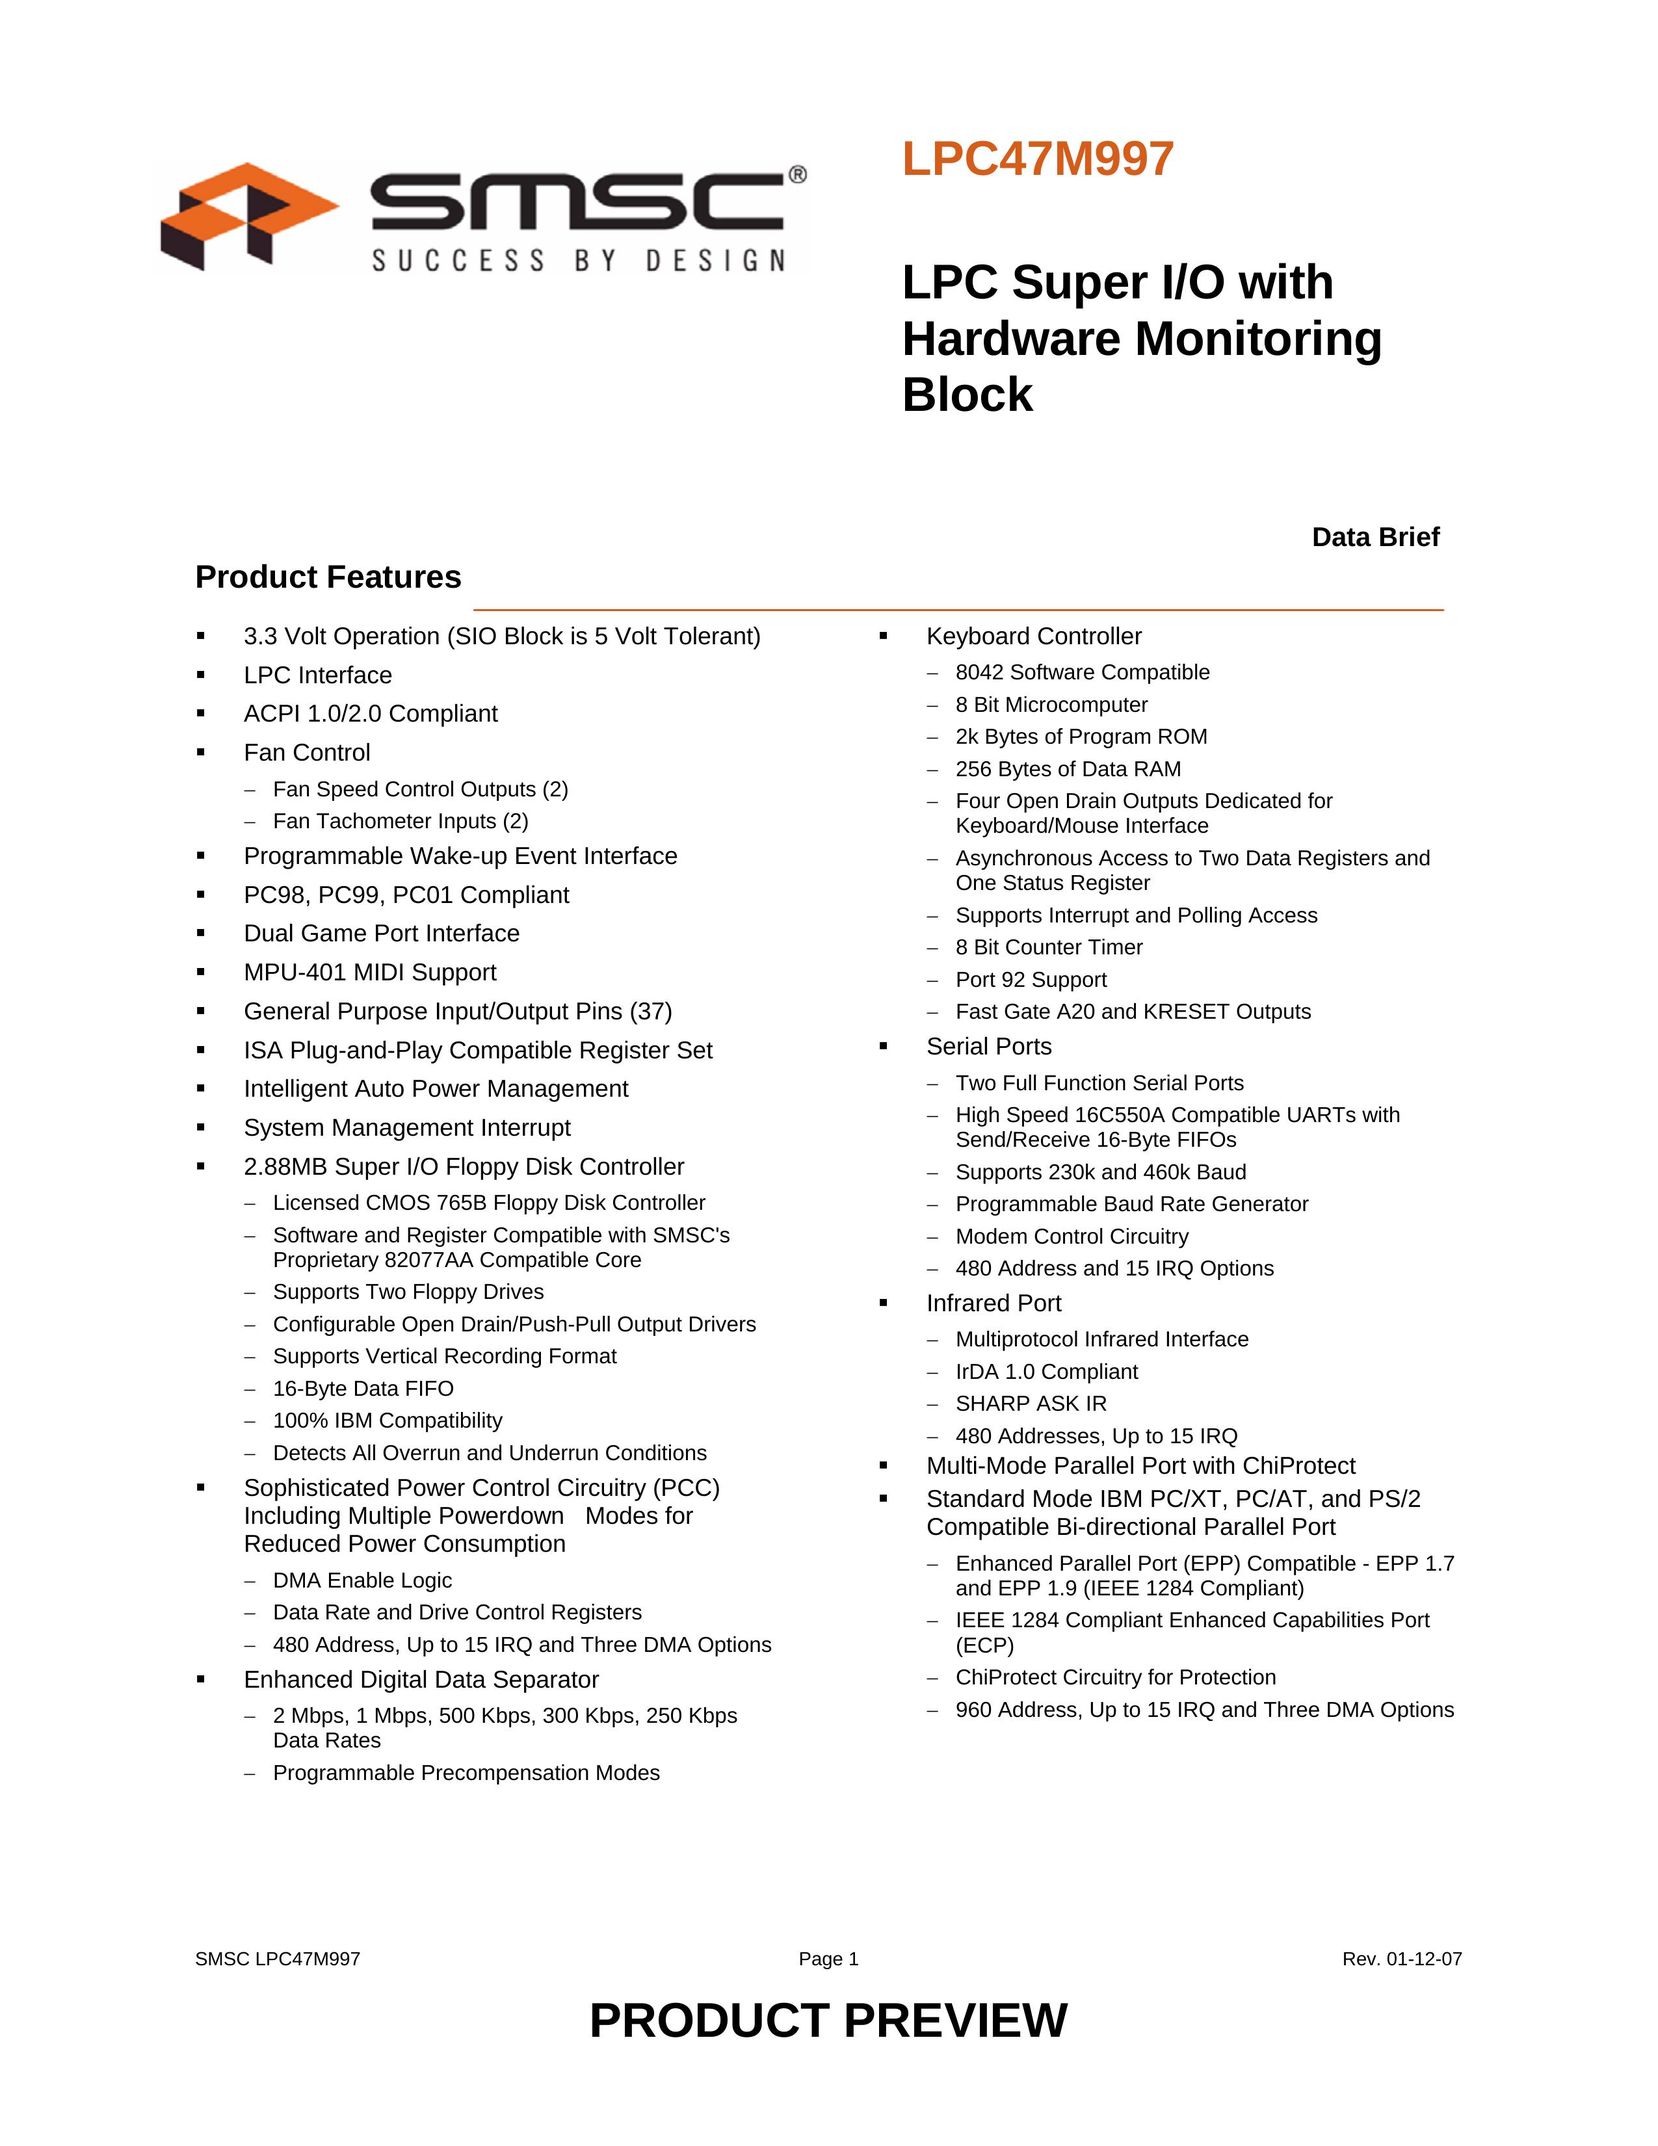 SMSC LPC47M997 Computer Hardware User Manual